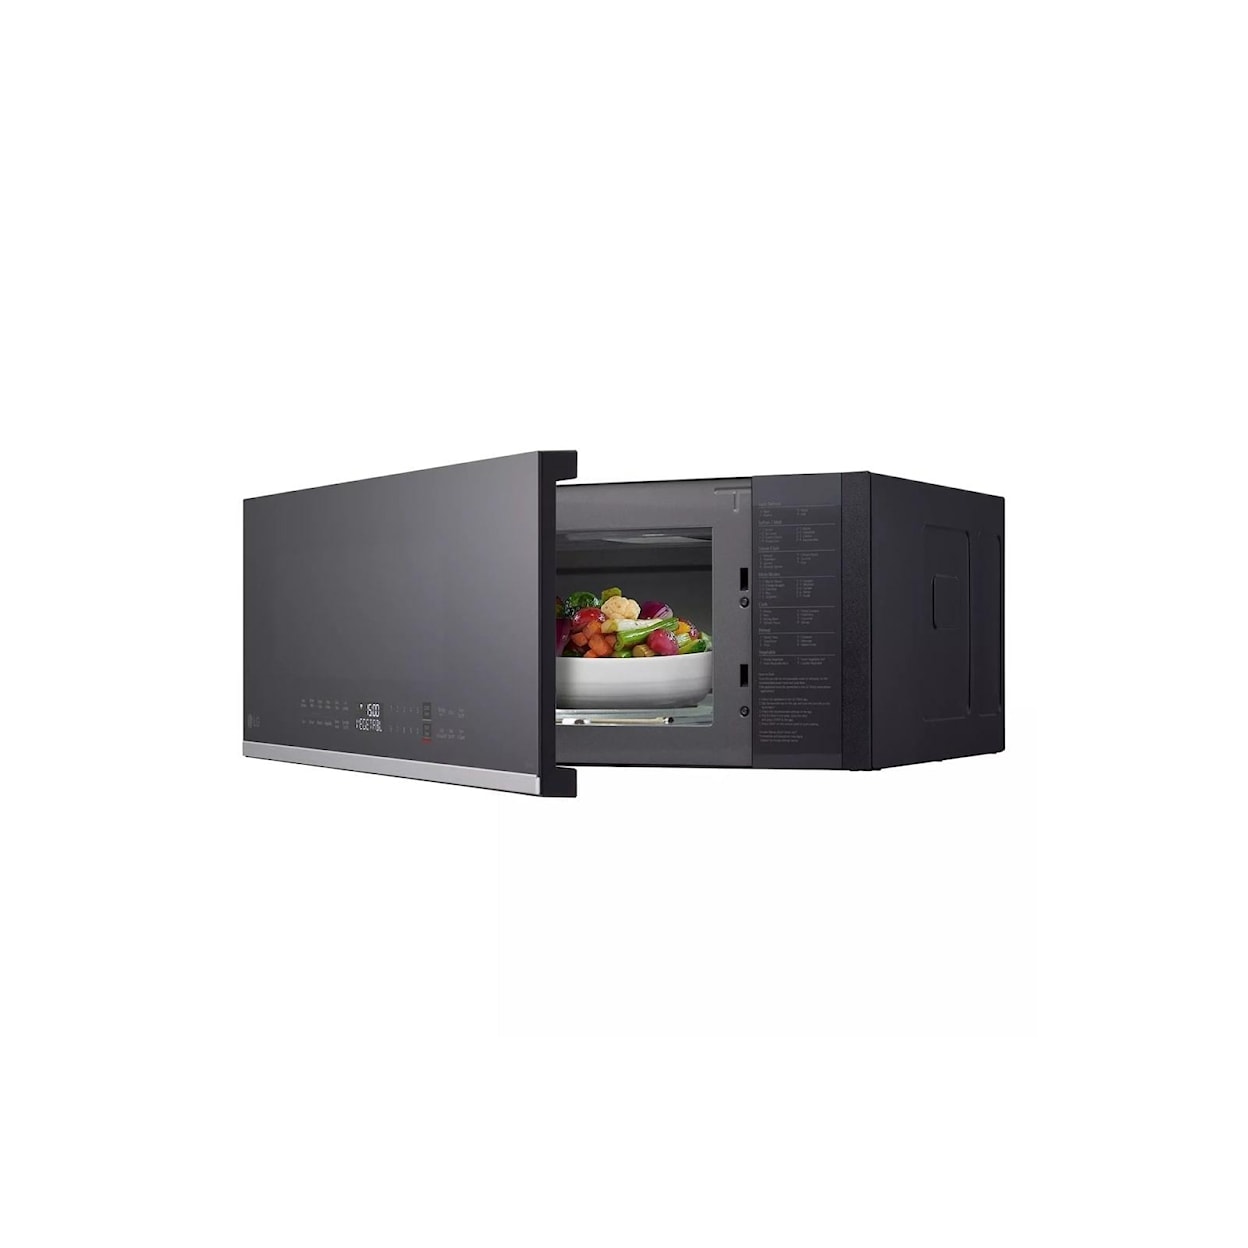 LG Appliances Microwave Over The Range Microwave